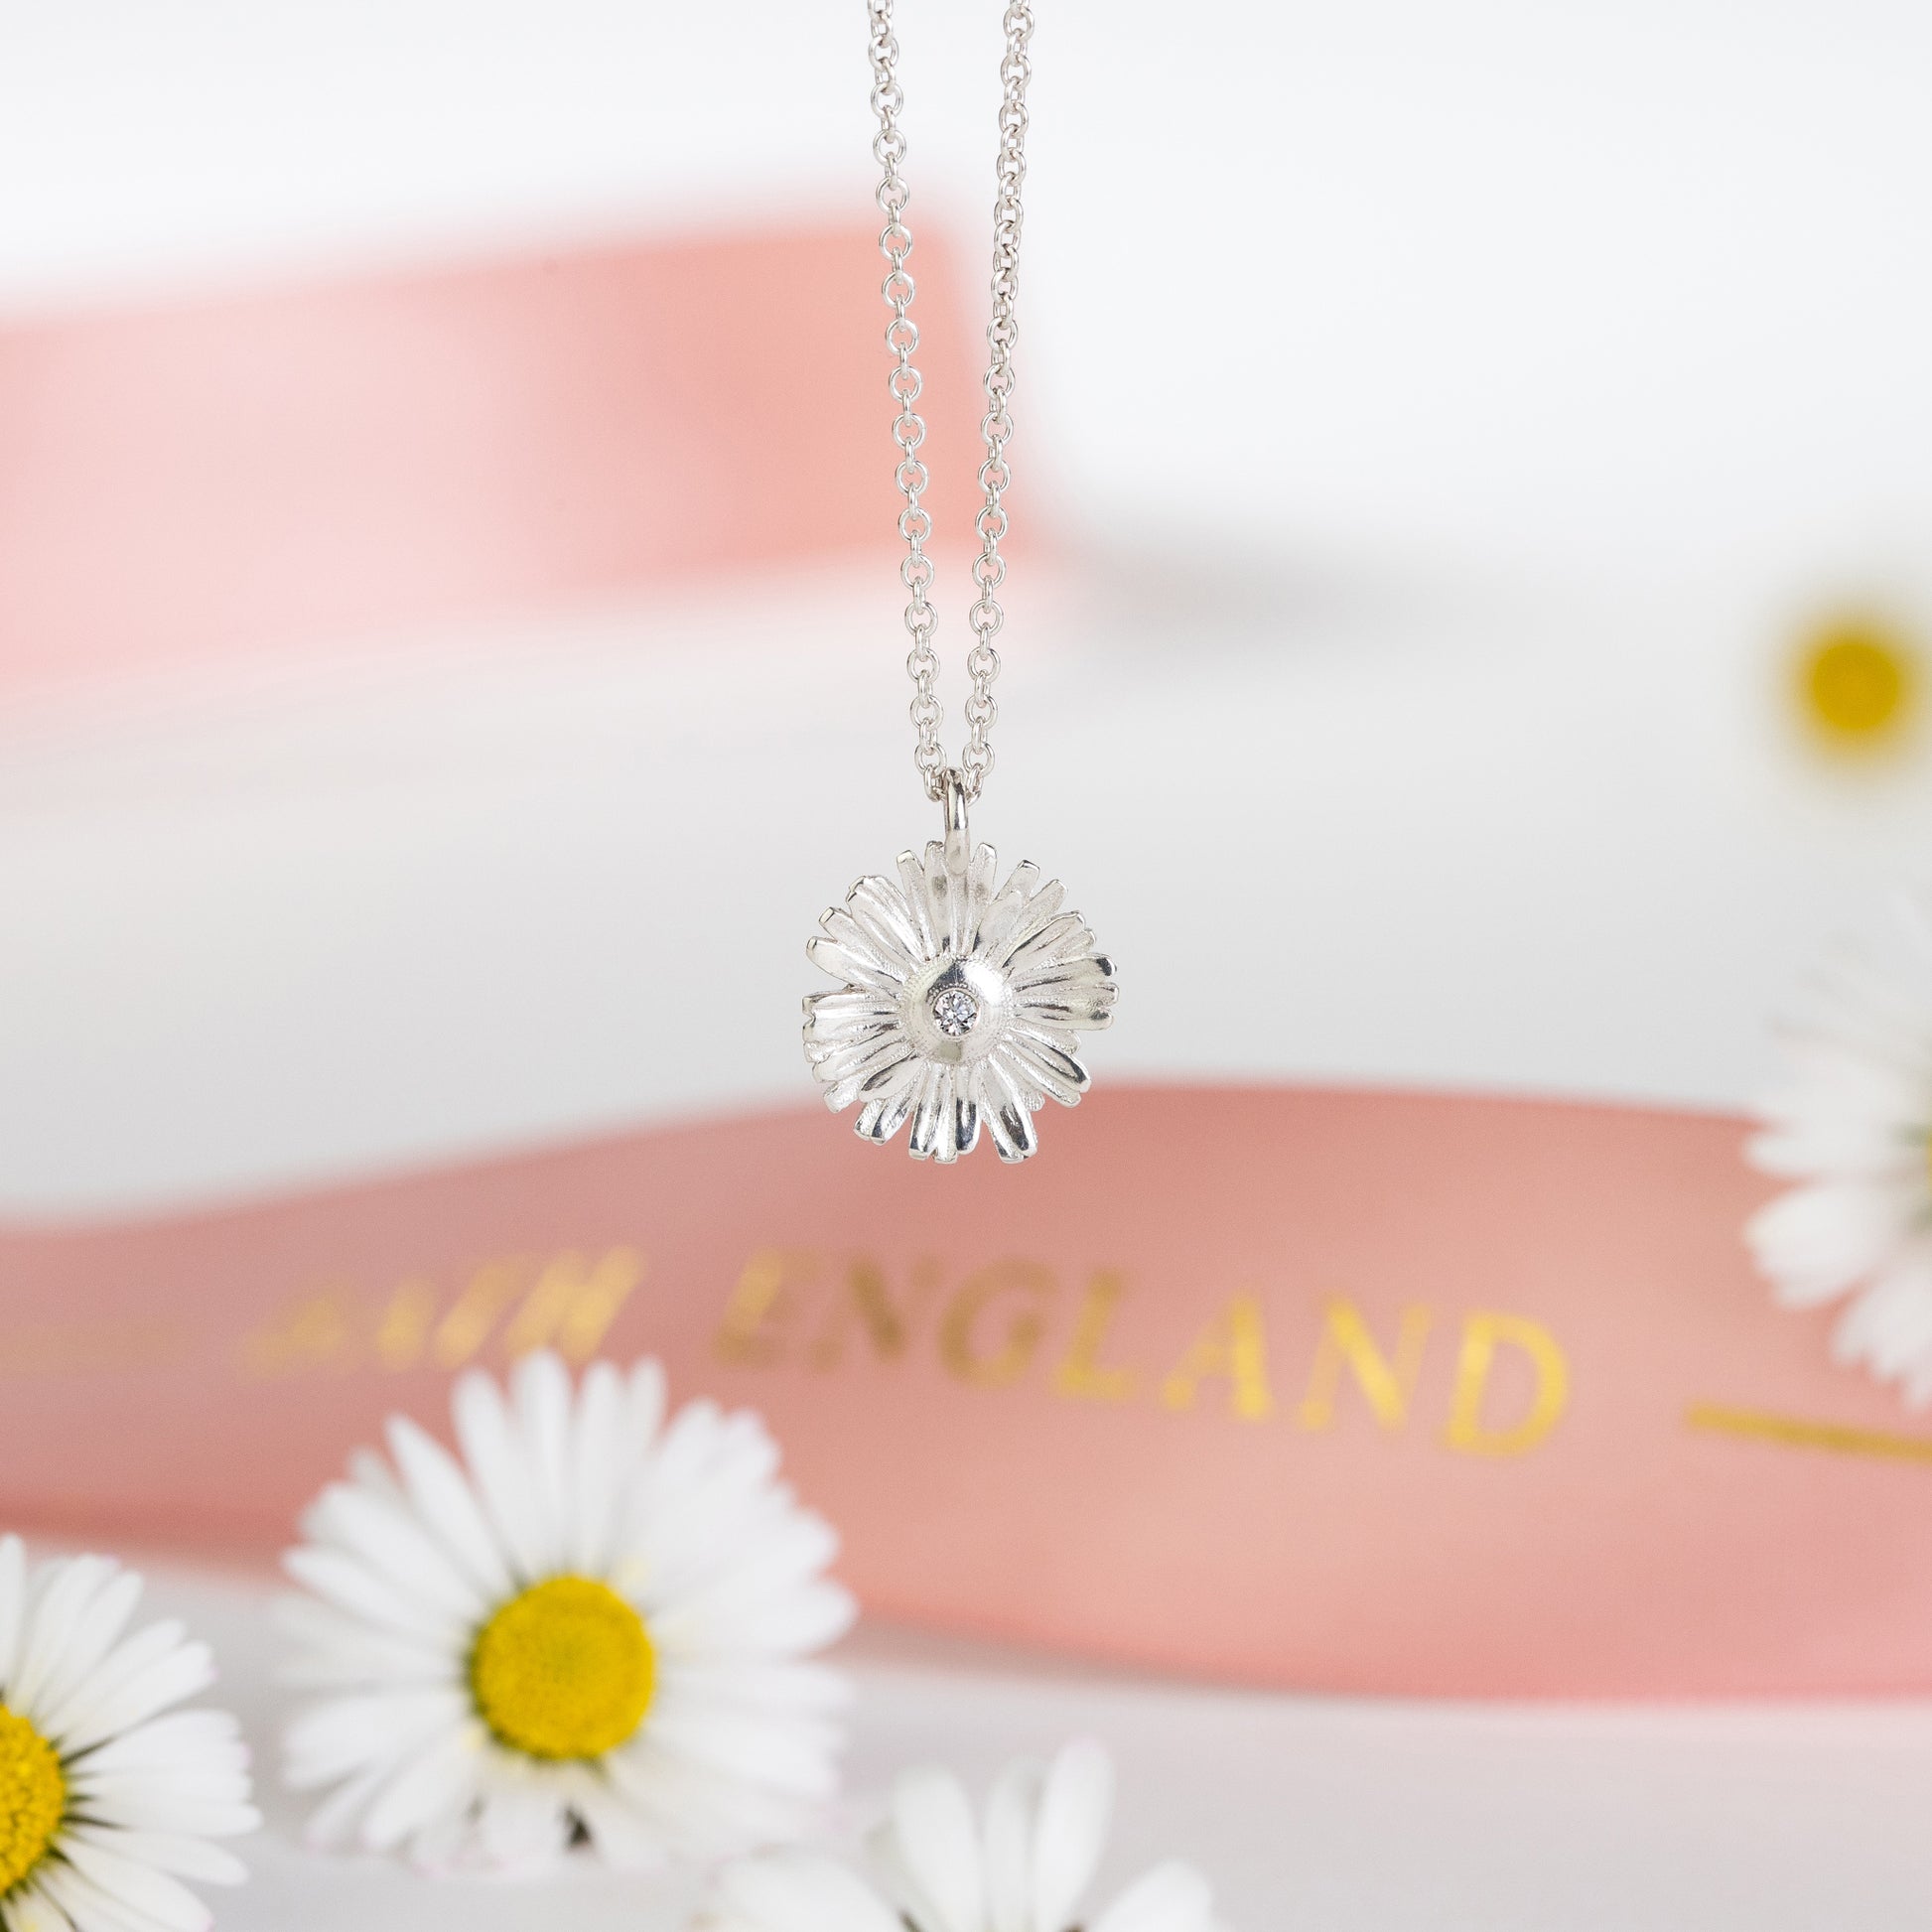 April Birth Flower & Birthstone Necklace - Daisy & Diamond - Silver